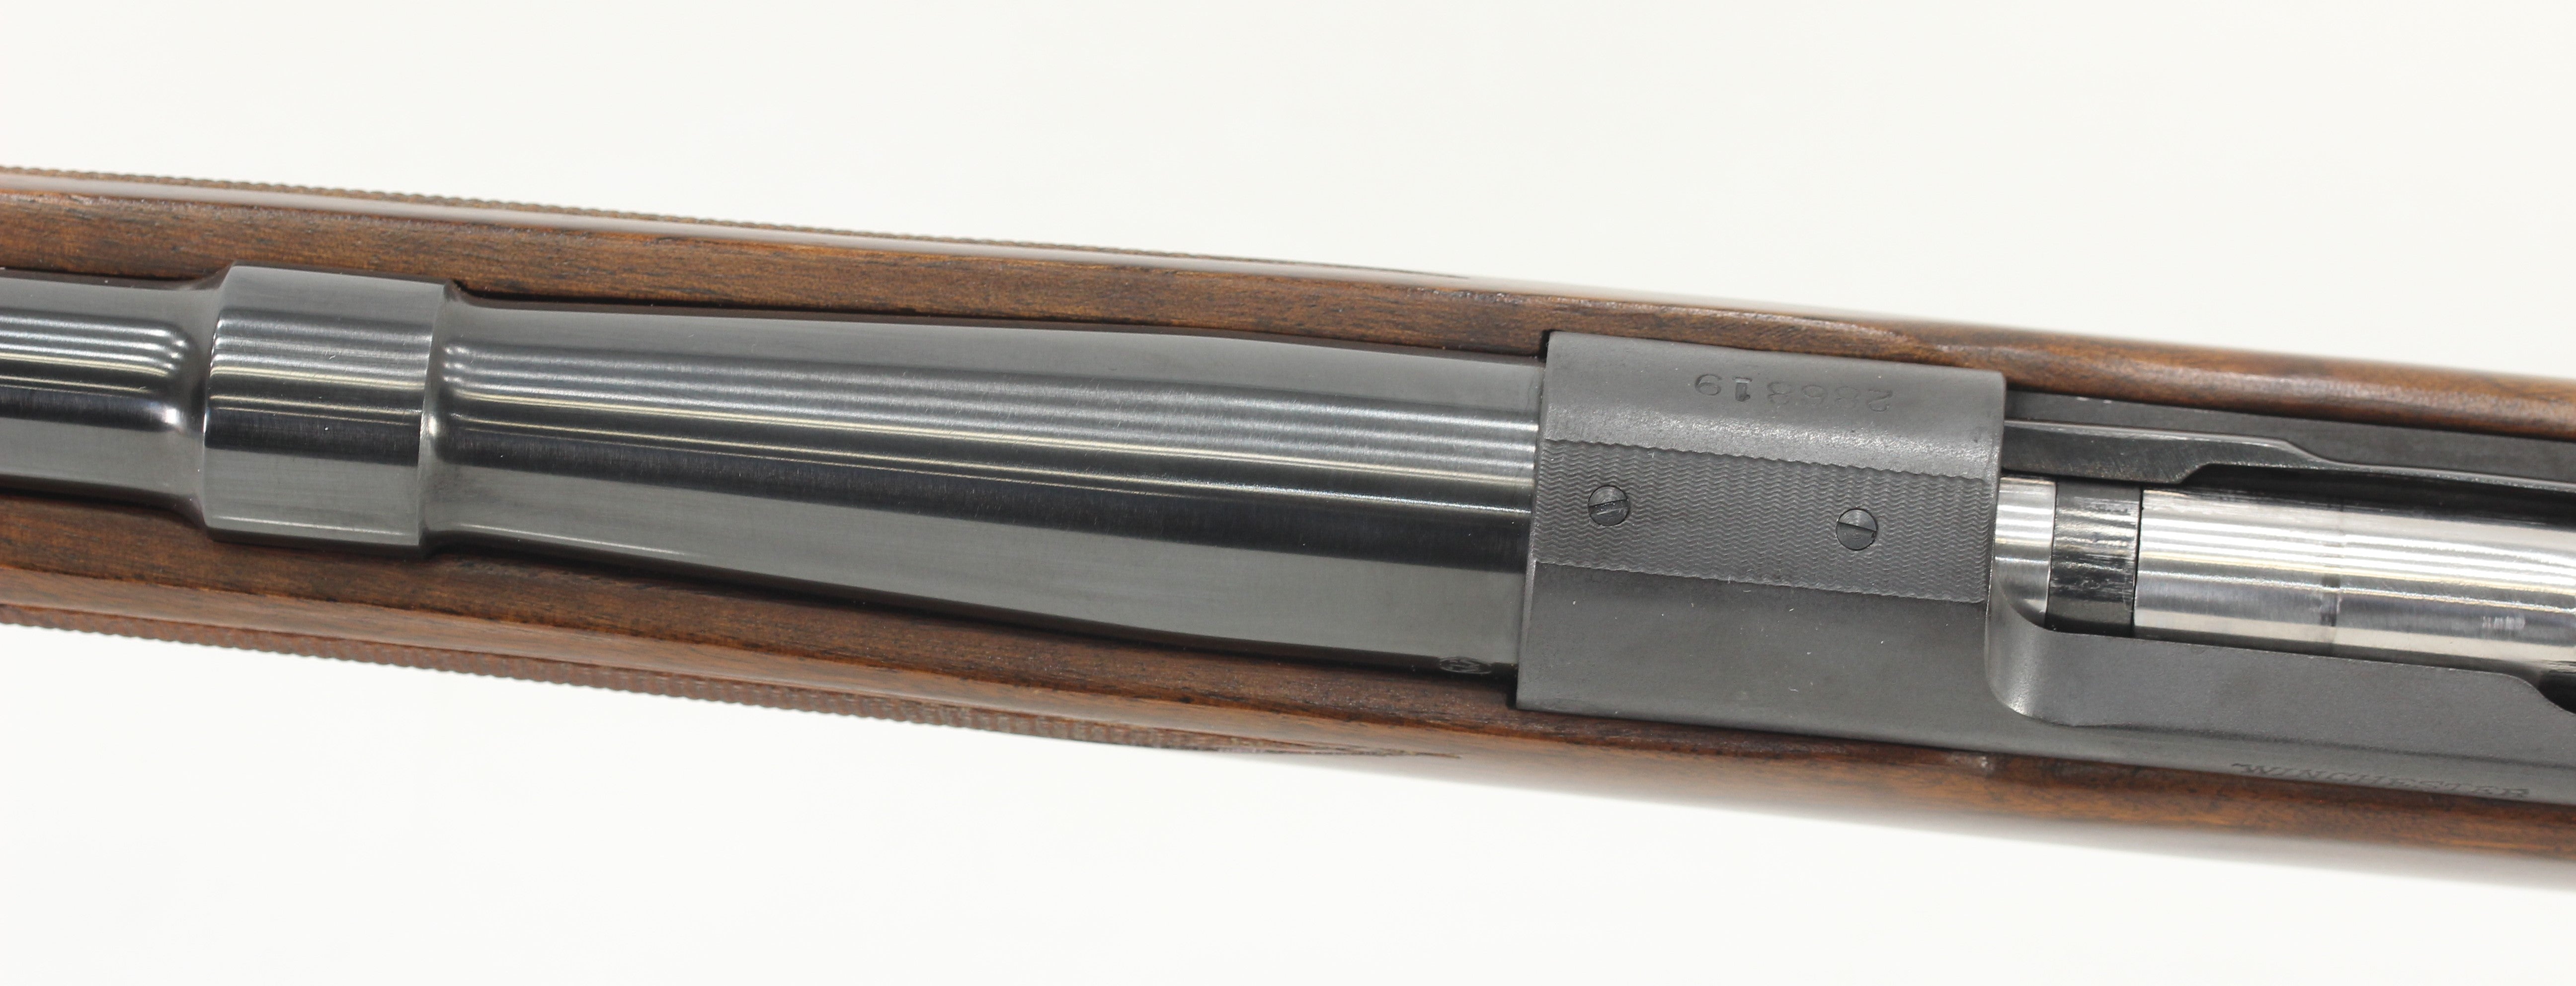 .257 Roberts Sightless Standard Tribute Rifle - 1954